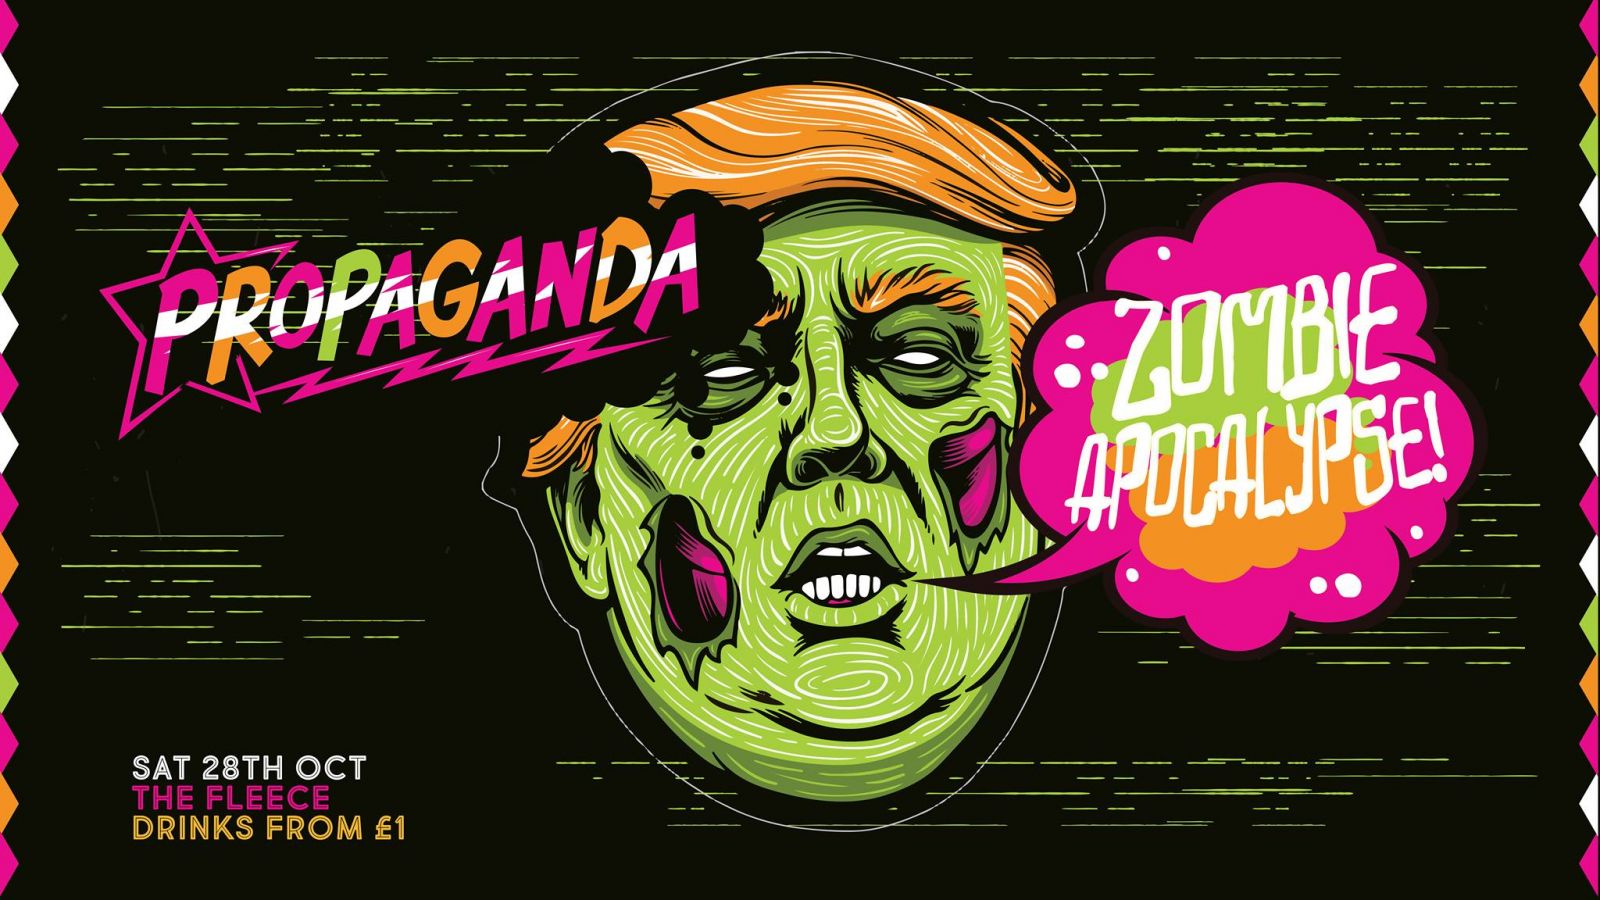 Zombie Apocalypse by Propaganda at The Fleece